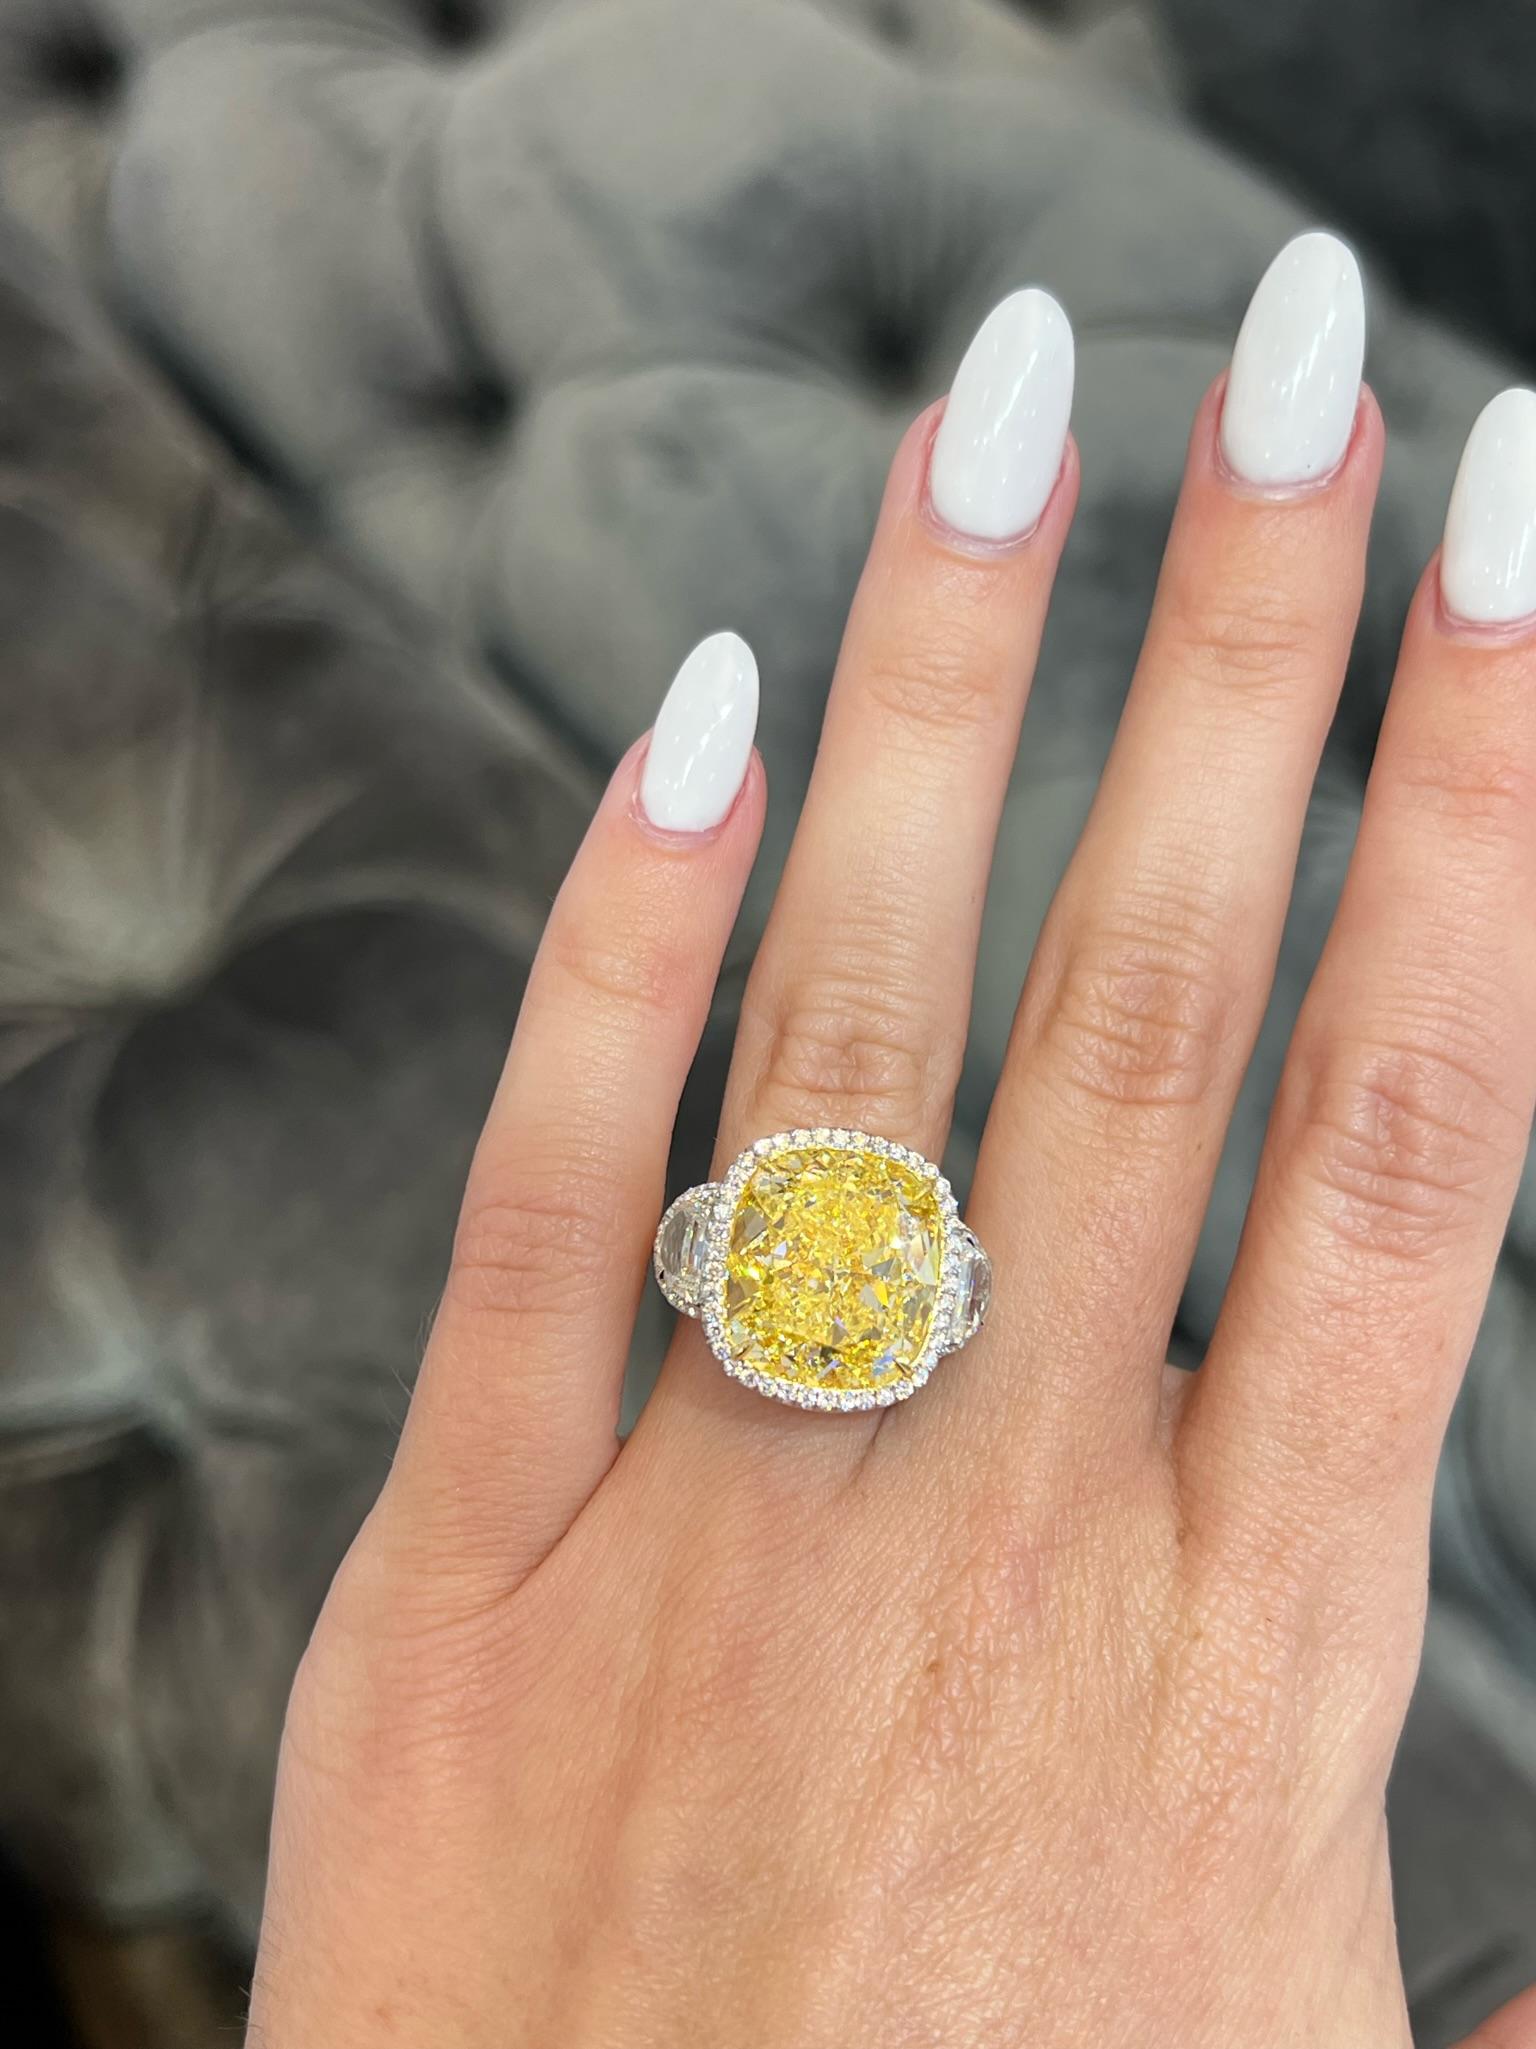 David Rosenberg 16.06 Carat Cushion Cut Fancy Yellow GIA Diamond Engagement Ring For Sale 1